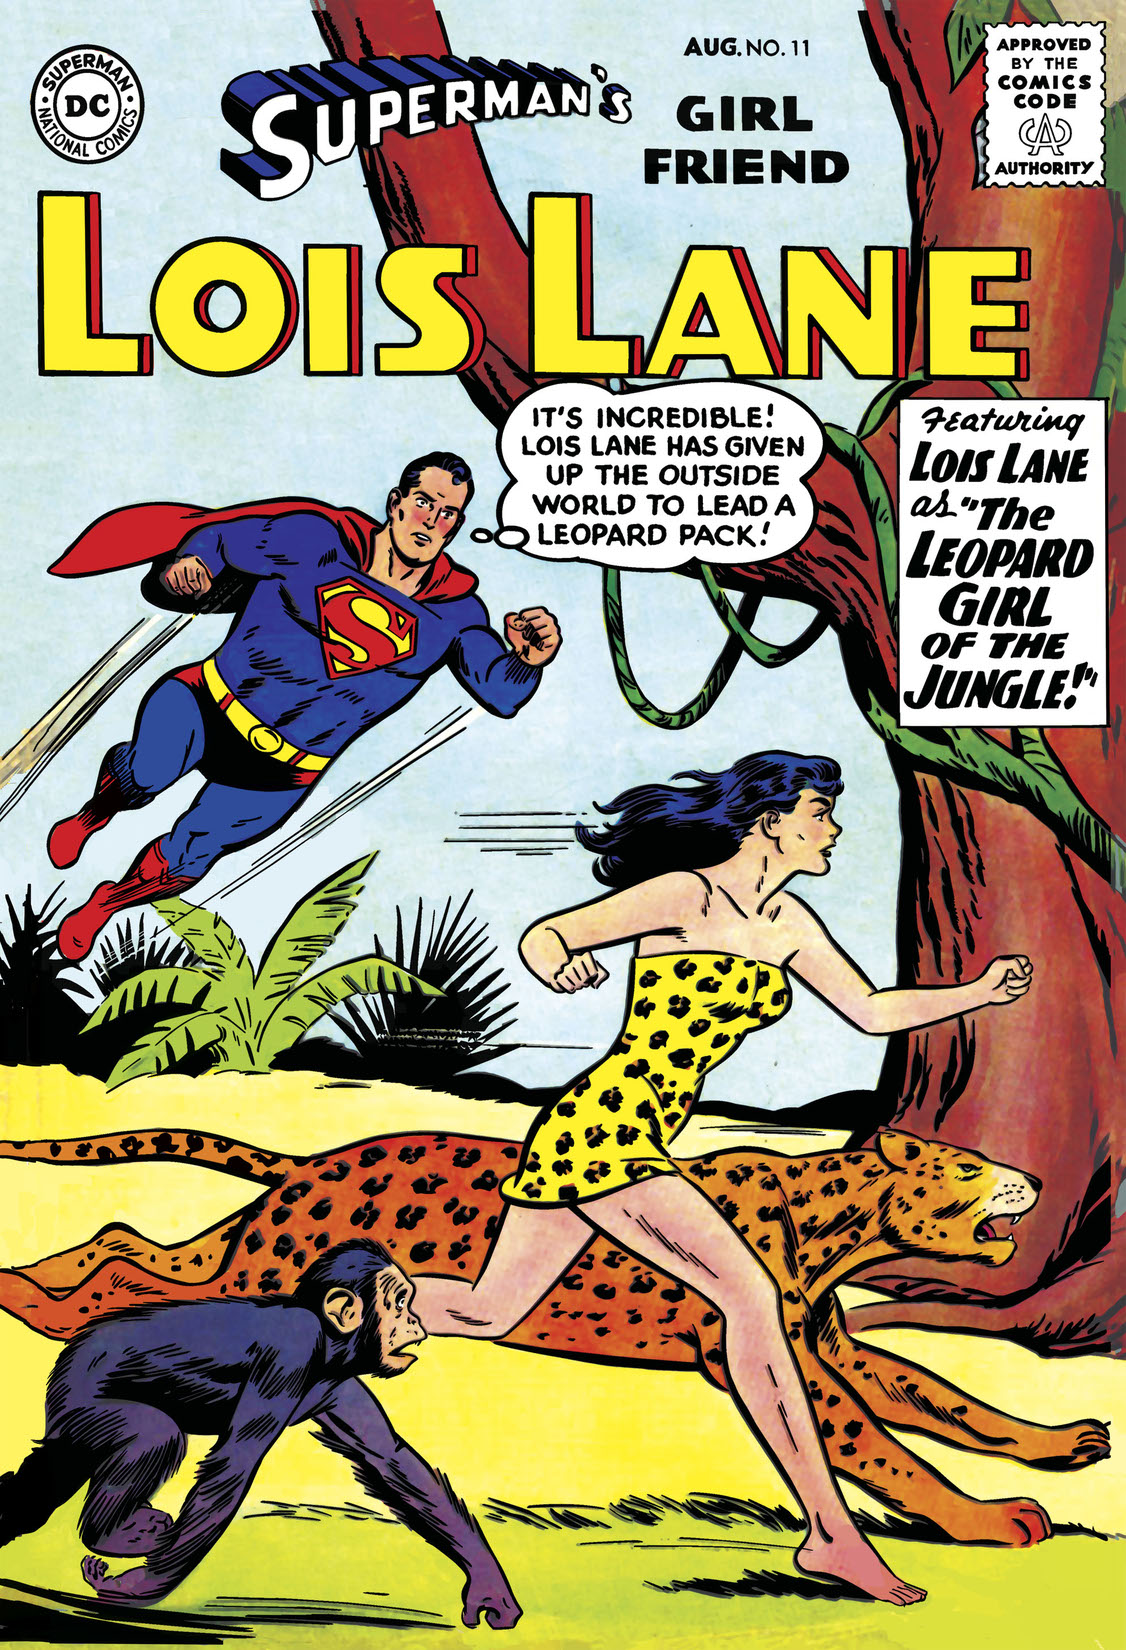 Superman's Girl Friend Lois Lane #11 preview images